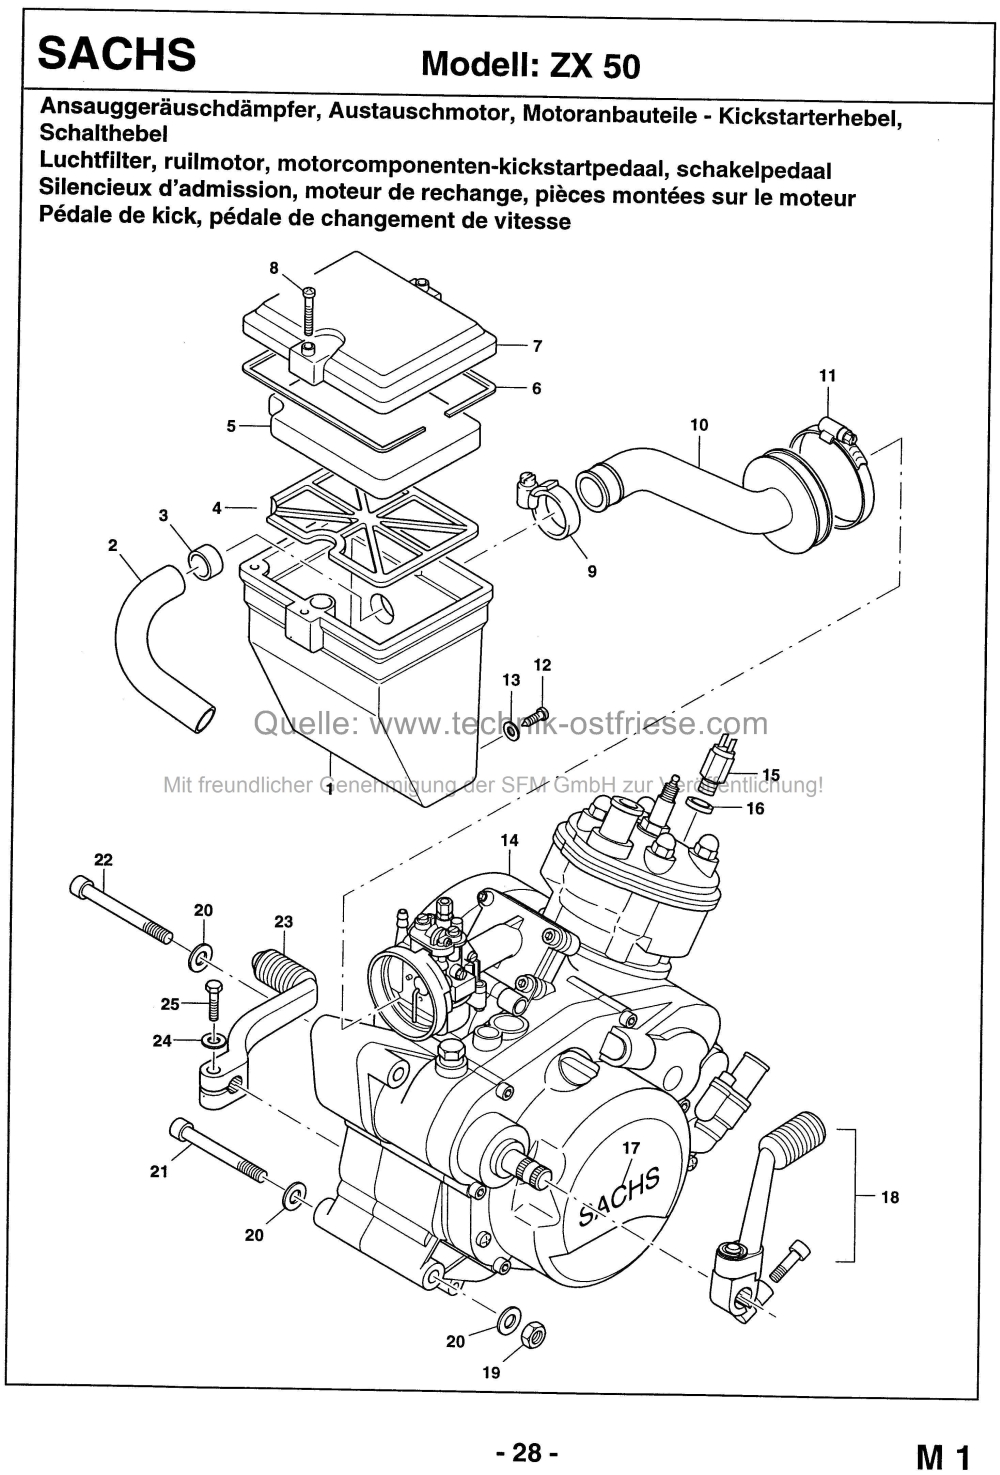 Ansauggeräuschdämpfer, Austauschmotor, Motoranbauteile - Kickstarterhebel, Schalthebel